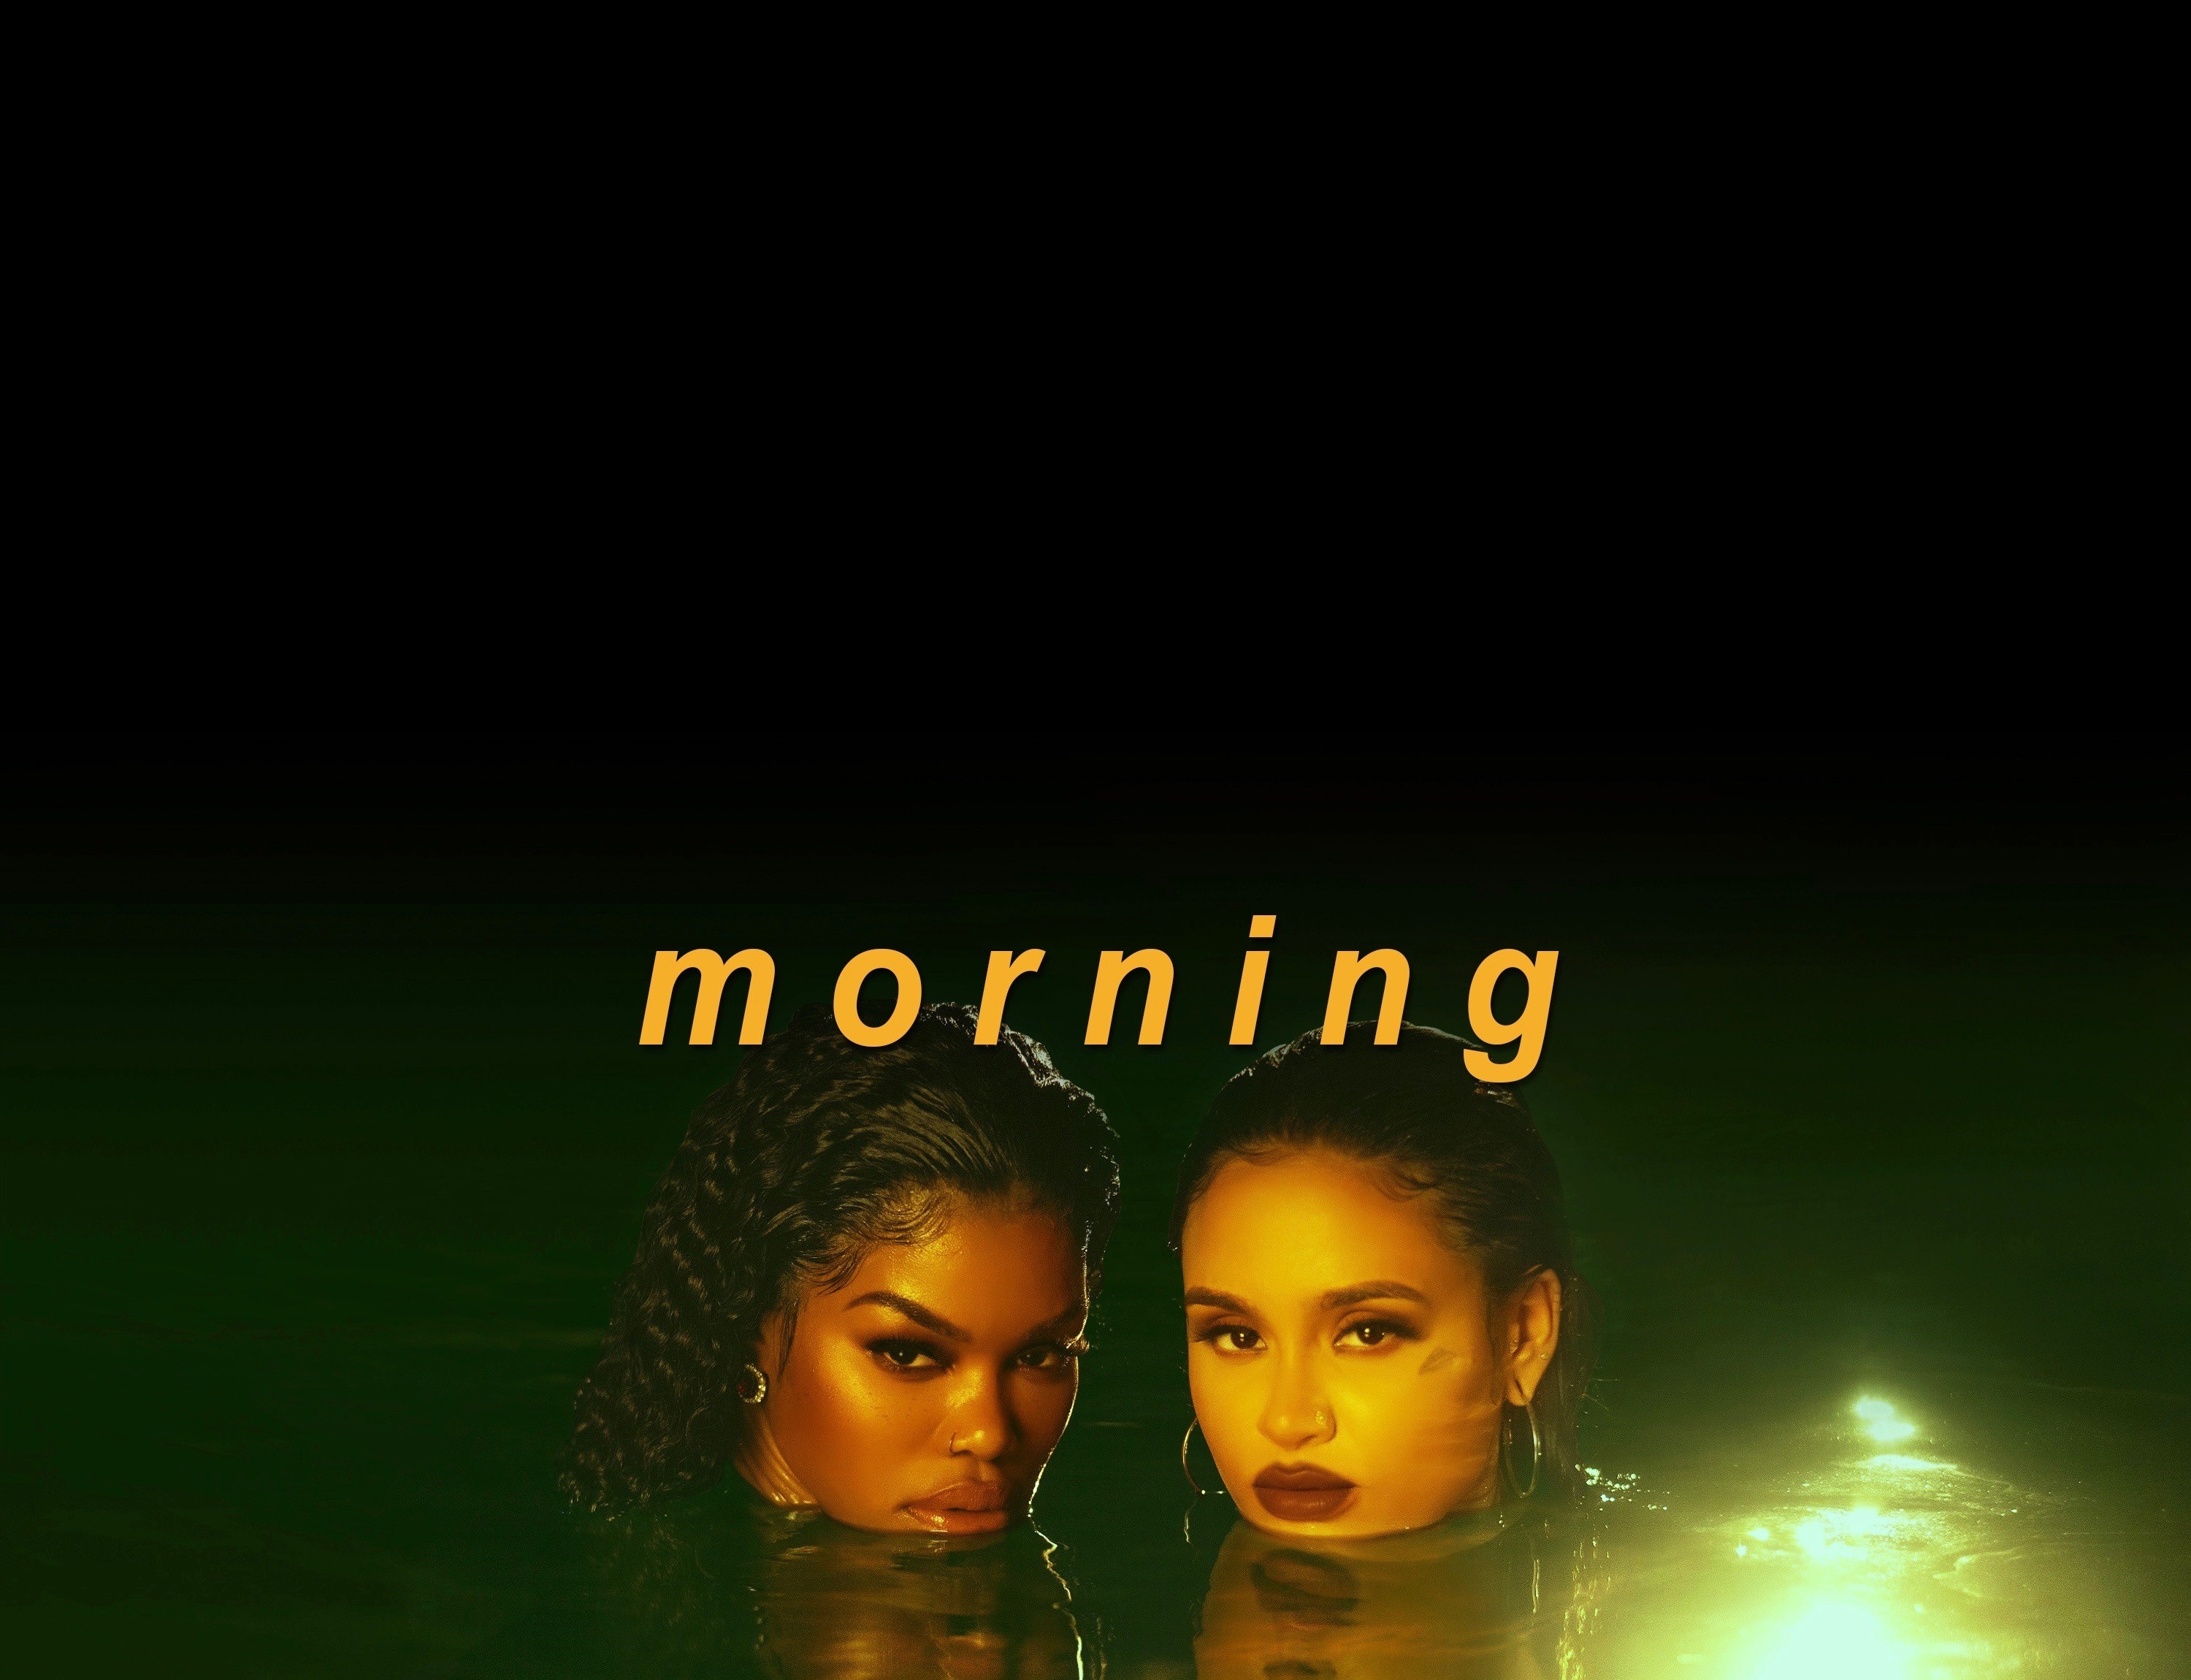 New Music: Teyana Taylor - Morning (featuring Kehlani)